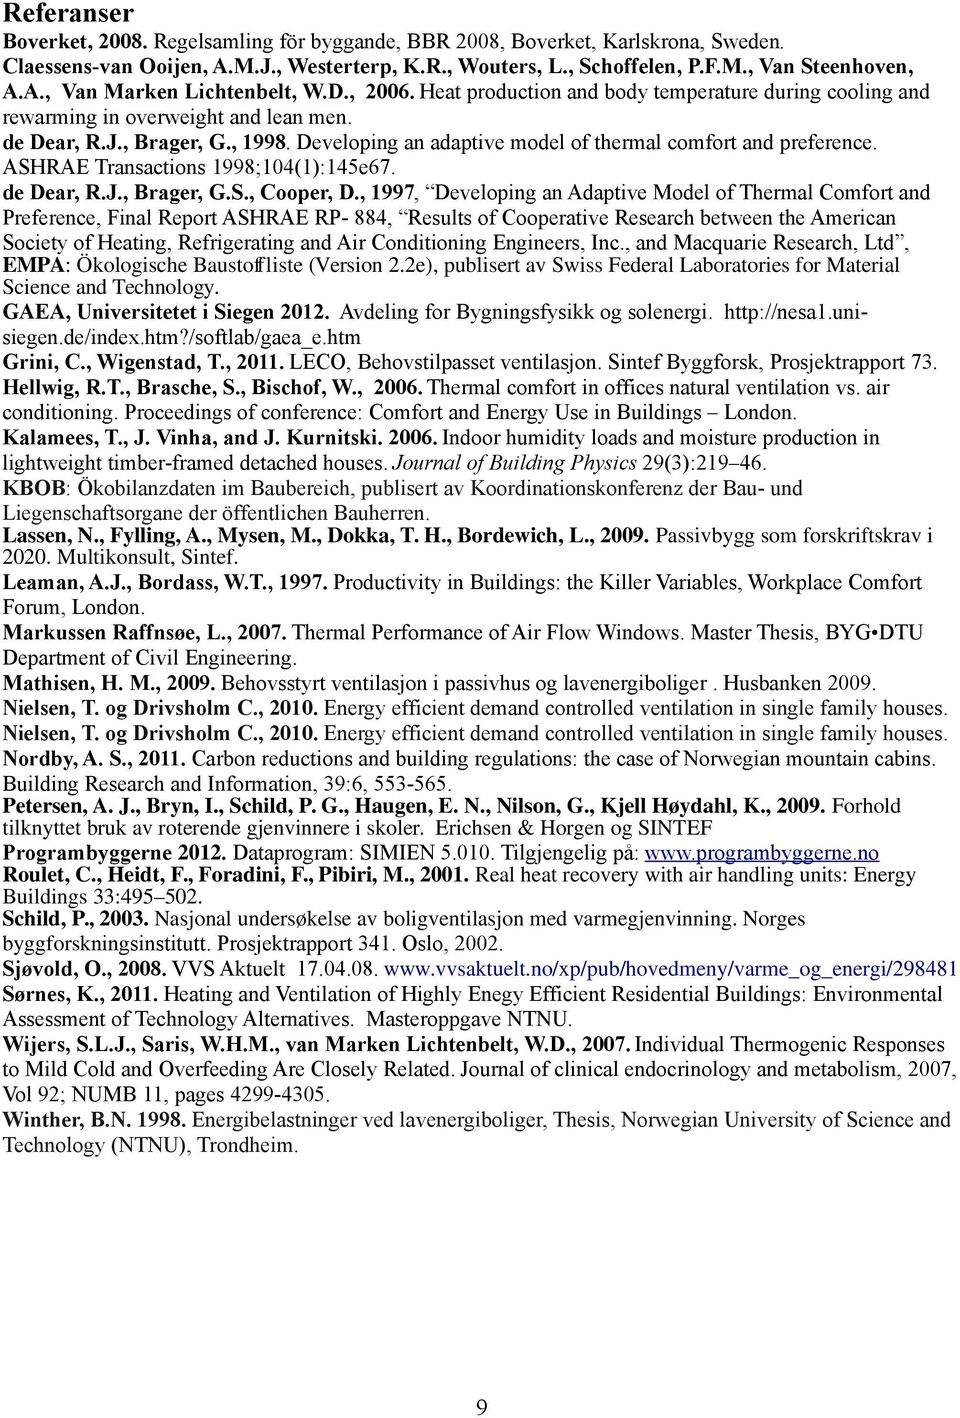 ASHRAE Transactions 1998;104(1):145e67. de Dear, R.J., Brager, G.S., Cooper, D.